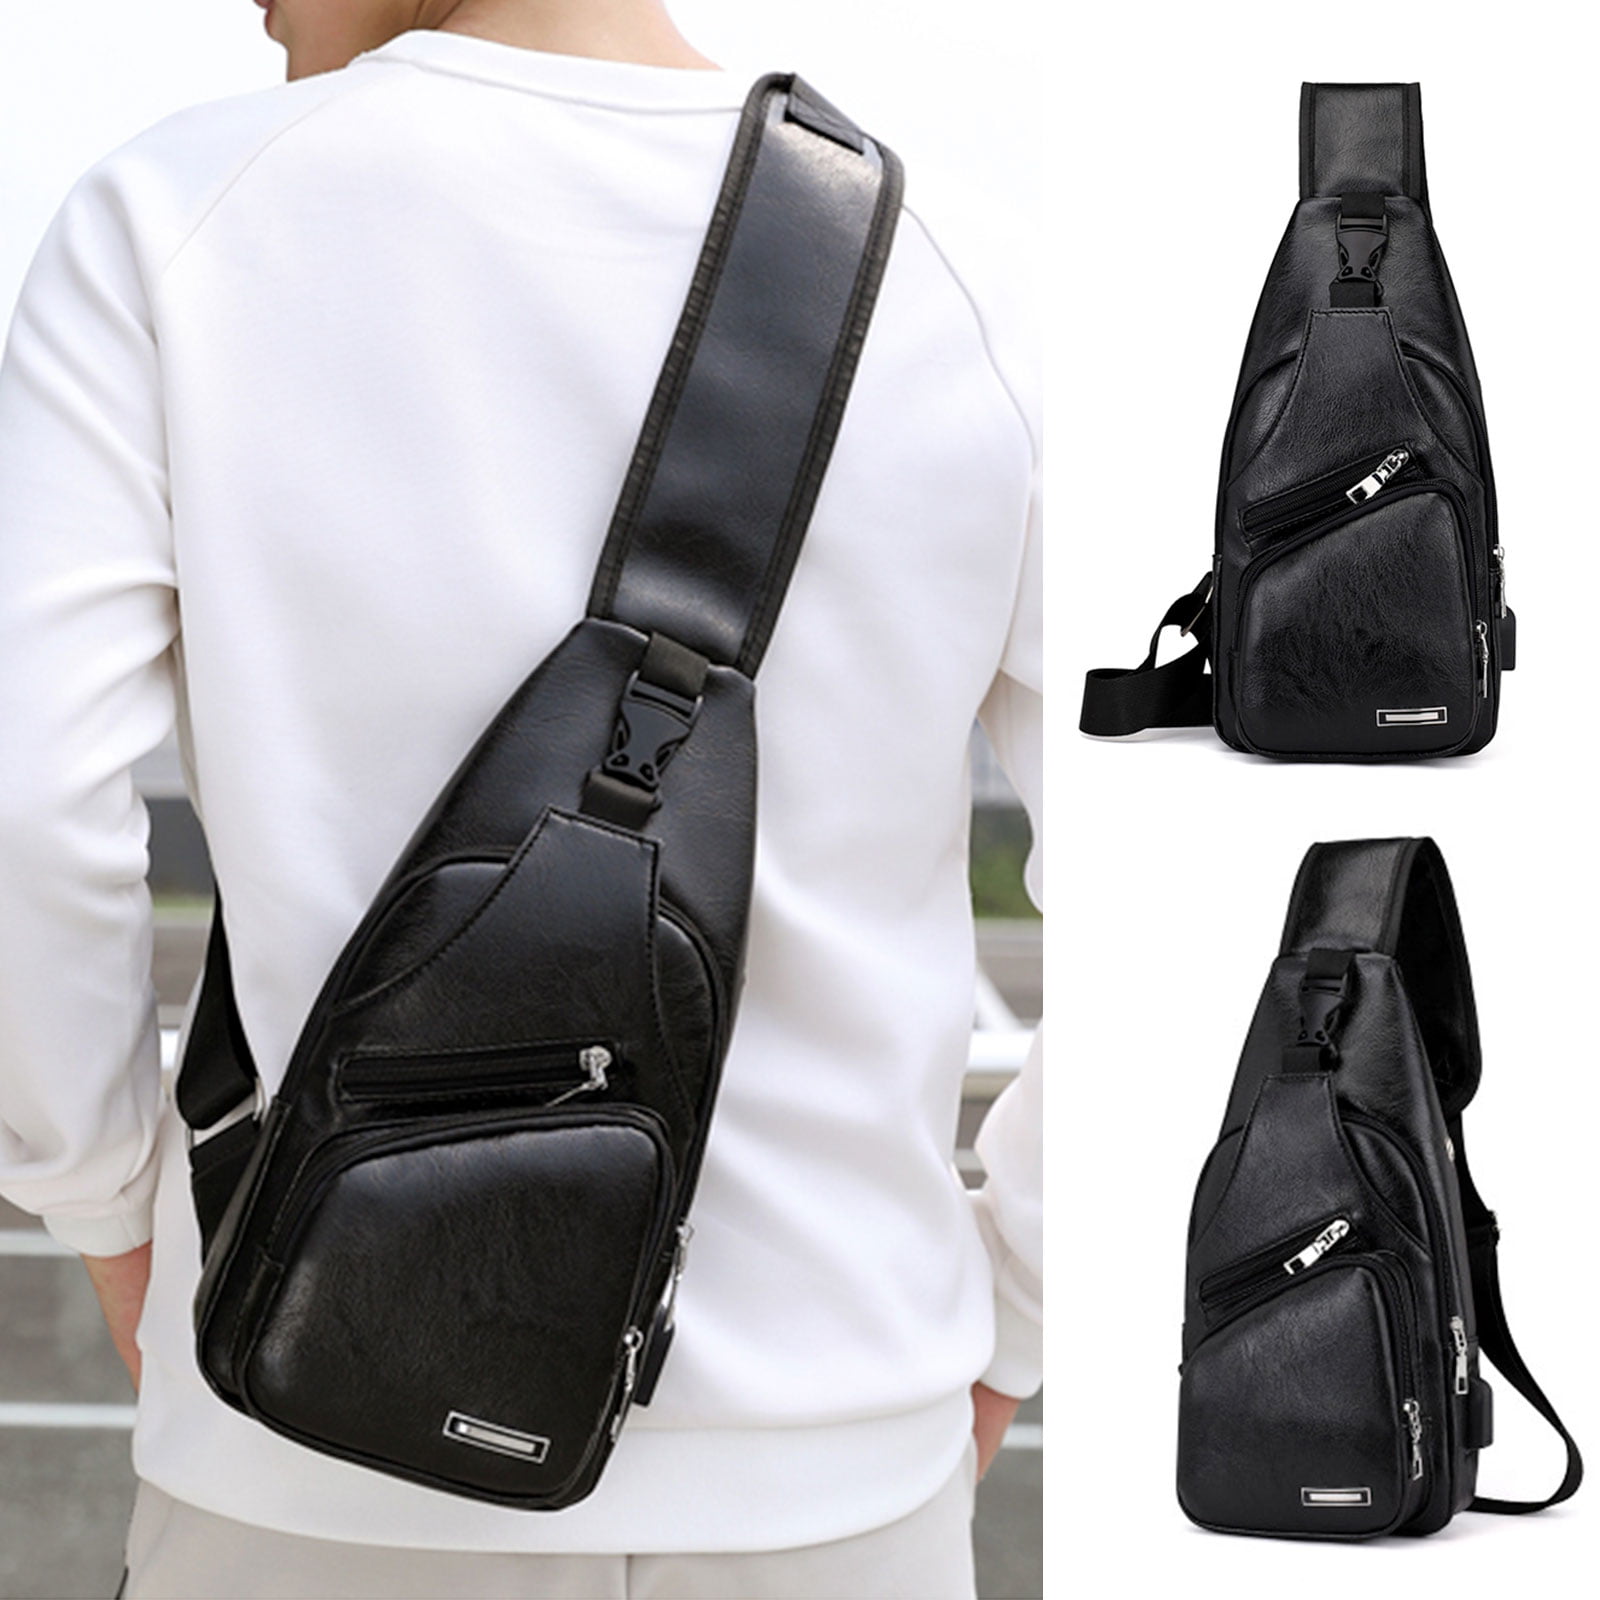 Sling Bag Shoulder Backpack Chest Bags Crossbody Daypack for Women & Men with USB Charging Port for Travel/Hiking/Outdoor Sport 